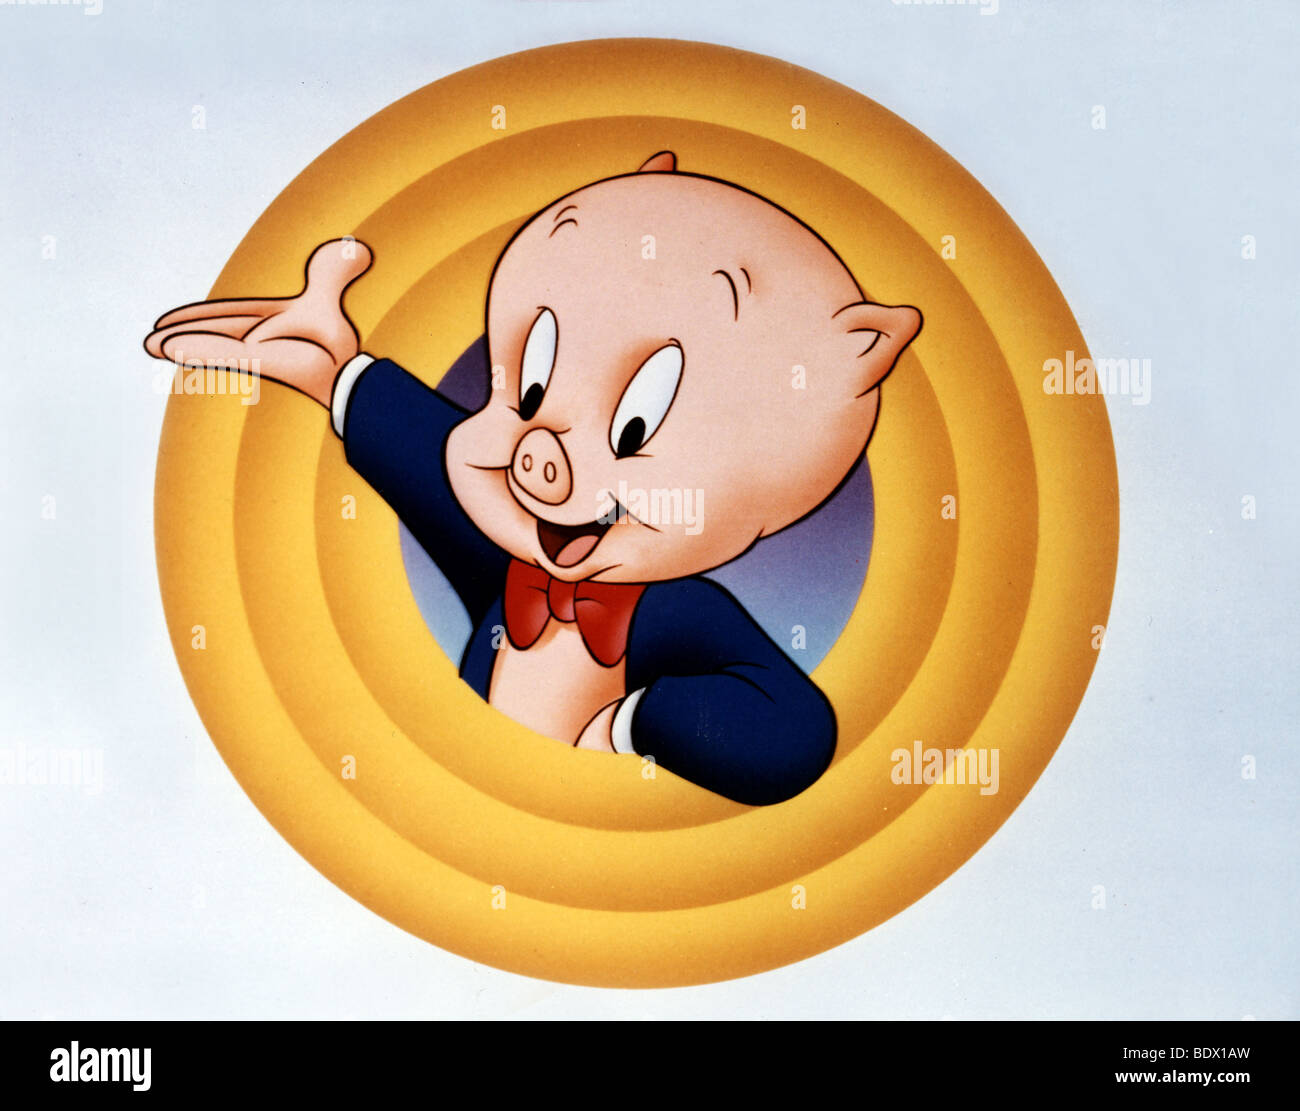 porky-pig-warner-bros-cartoon-character-BDX1AW.jpg